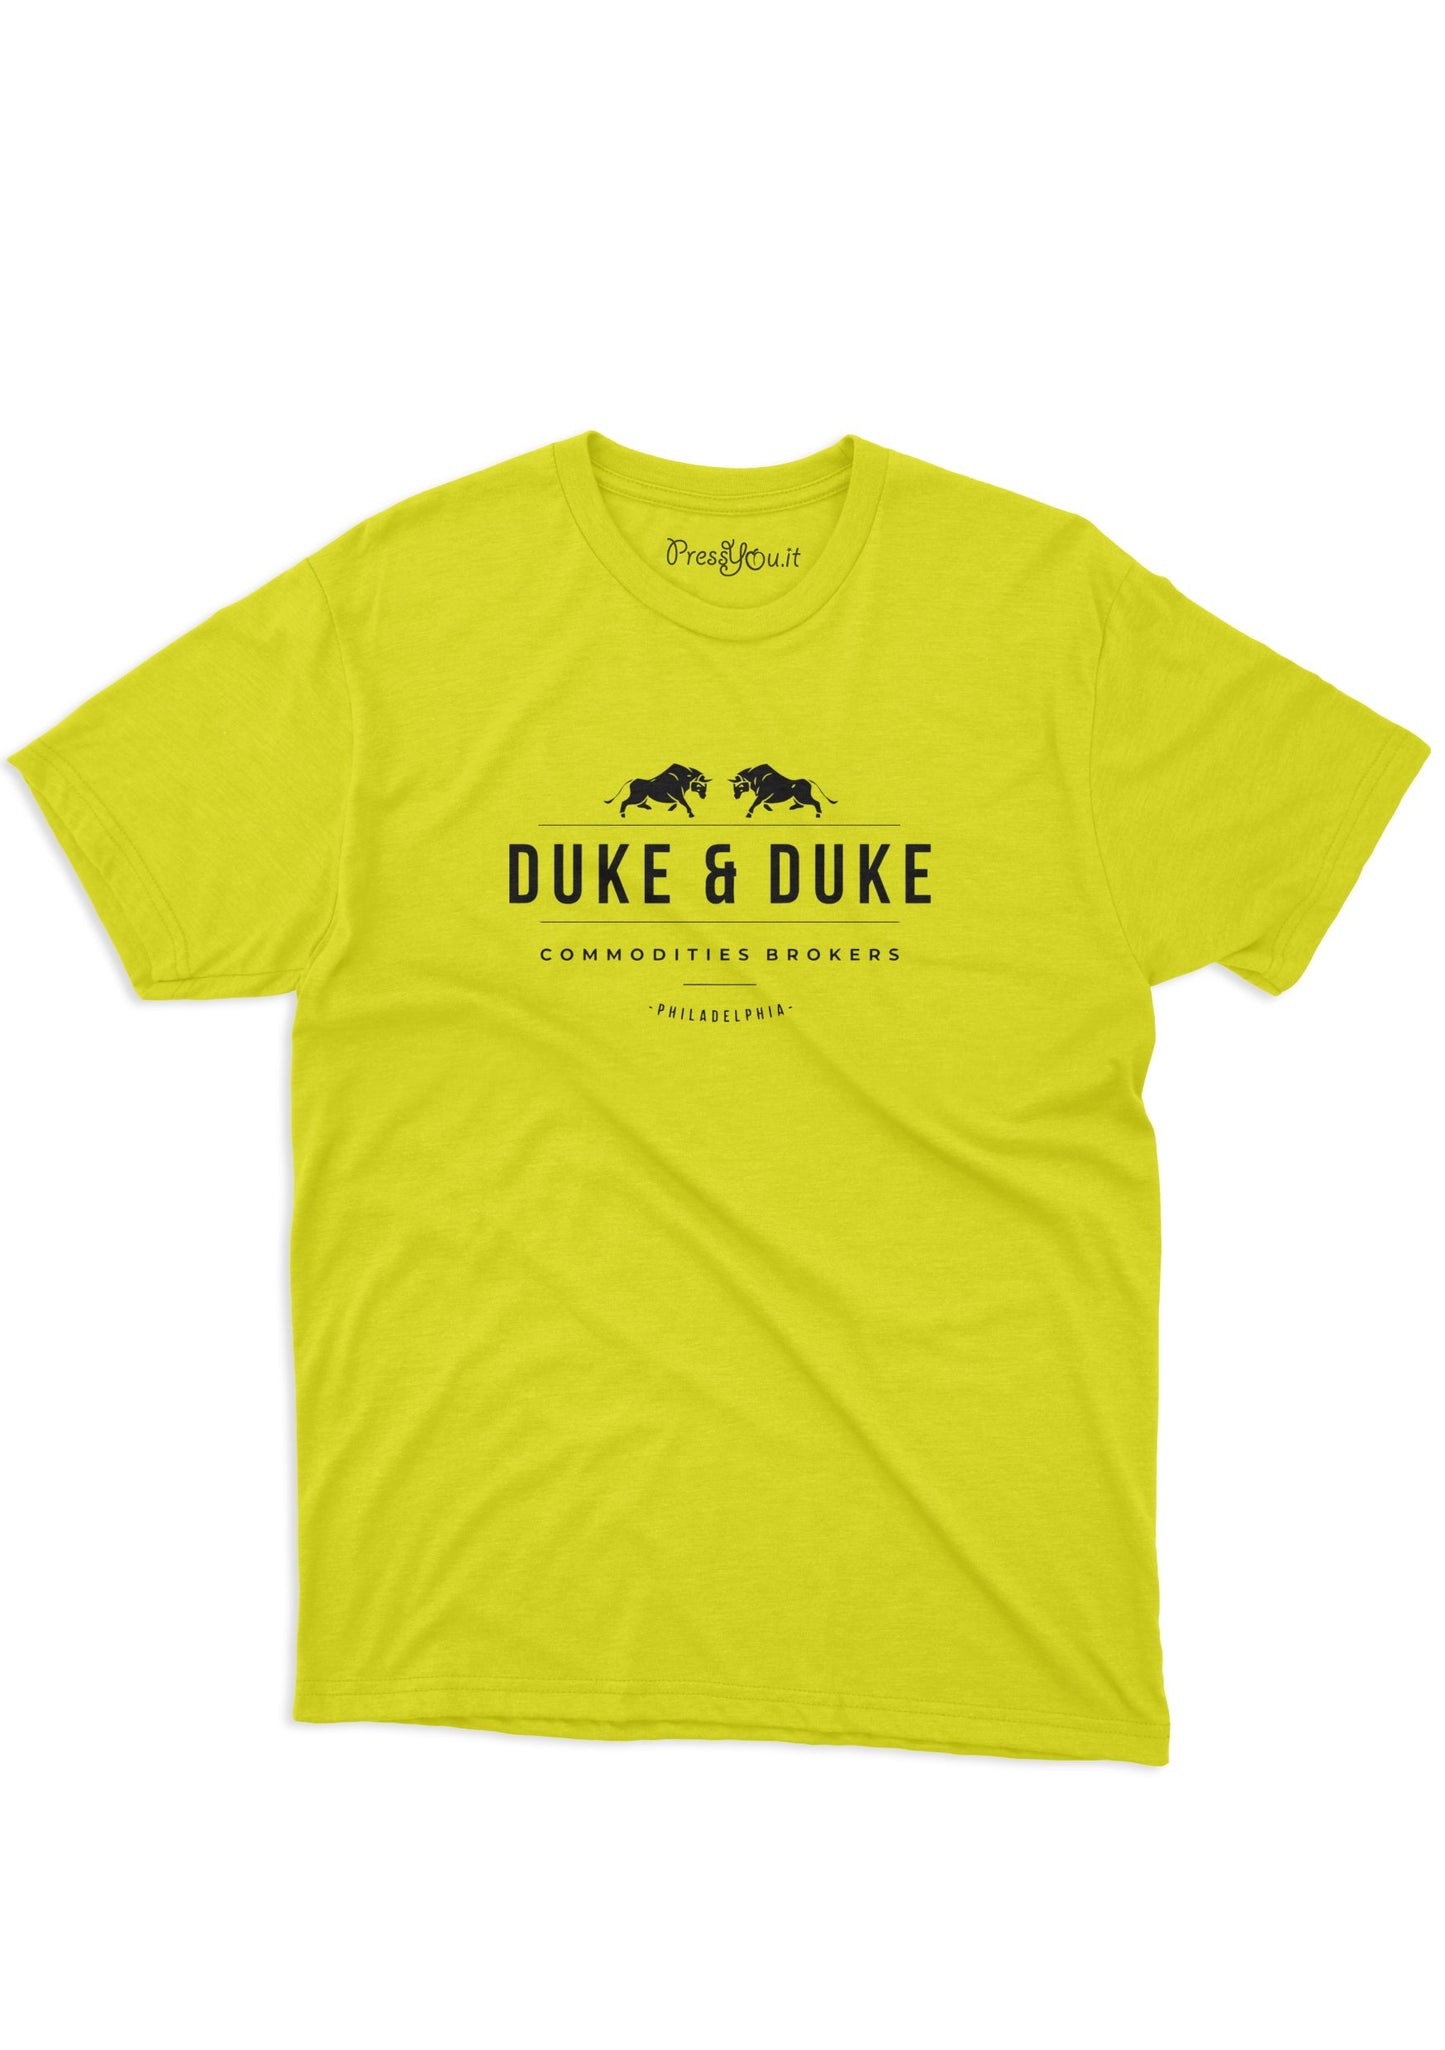 maglietta t-shirt-duke and duke  una poltrona anni 80 cult